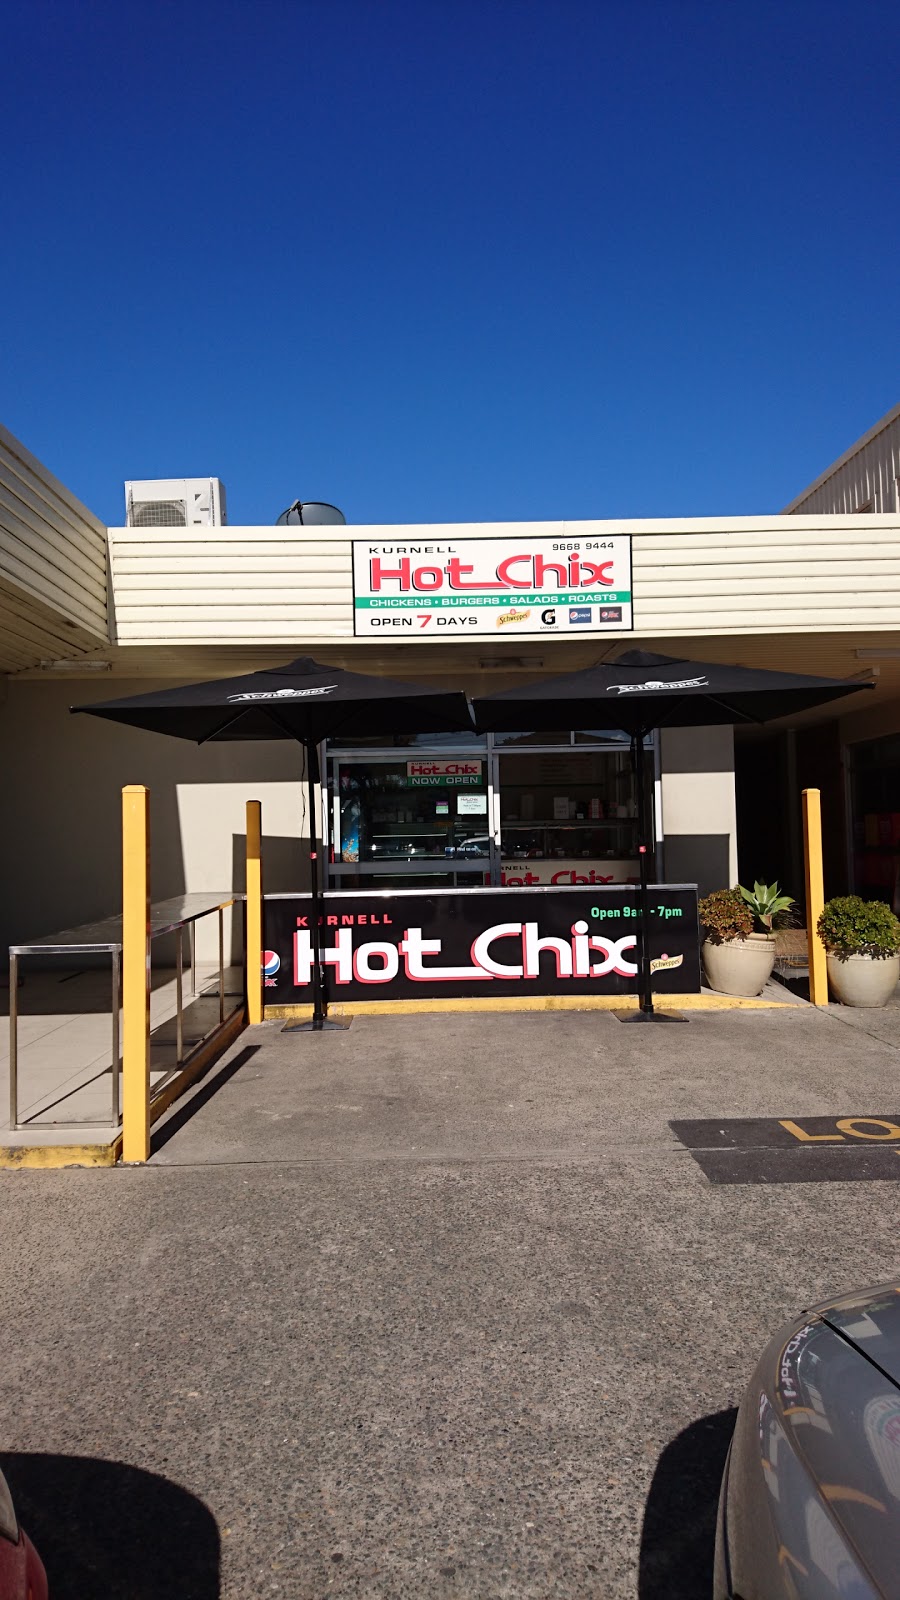 HOT CHIX | restaurant | 20 Torres St, Kurnell NSW 2231, Australia | 96689444 OR +61 96689444